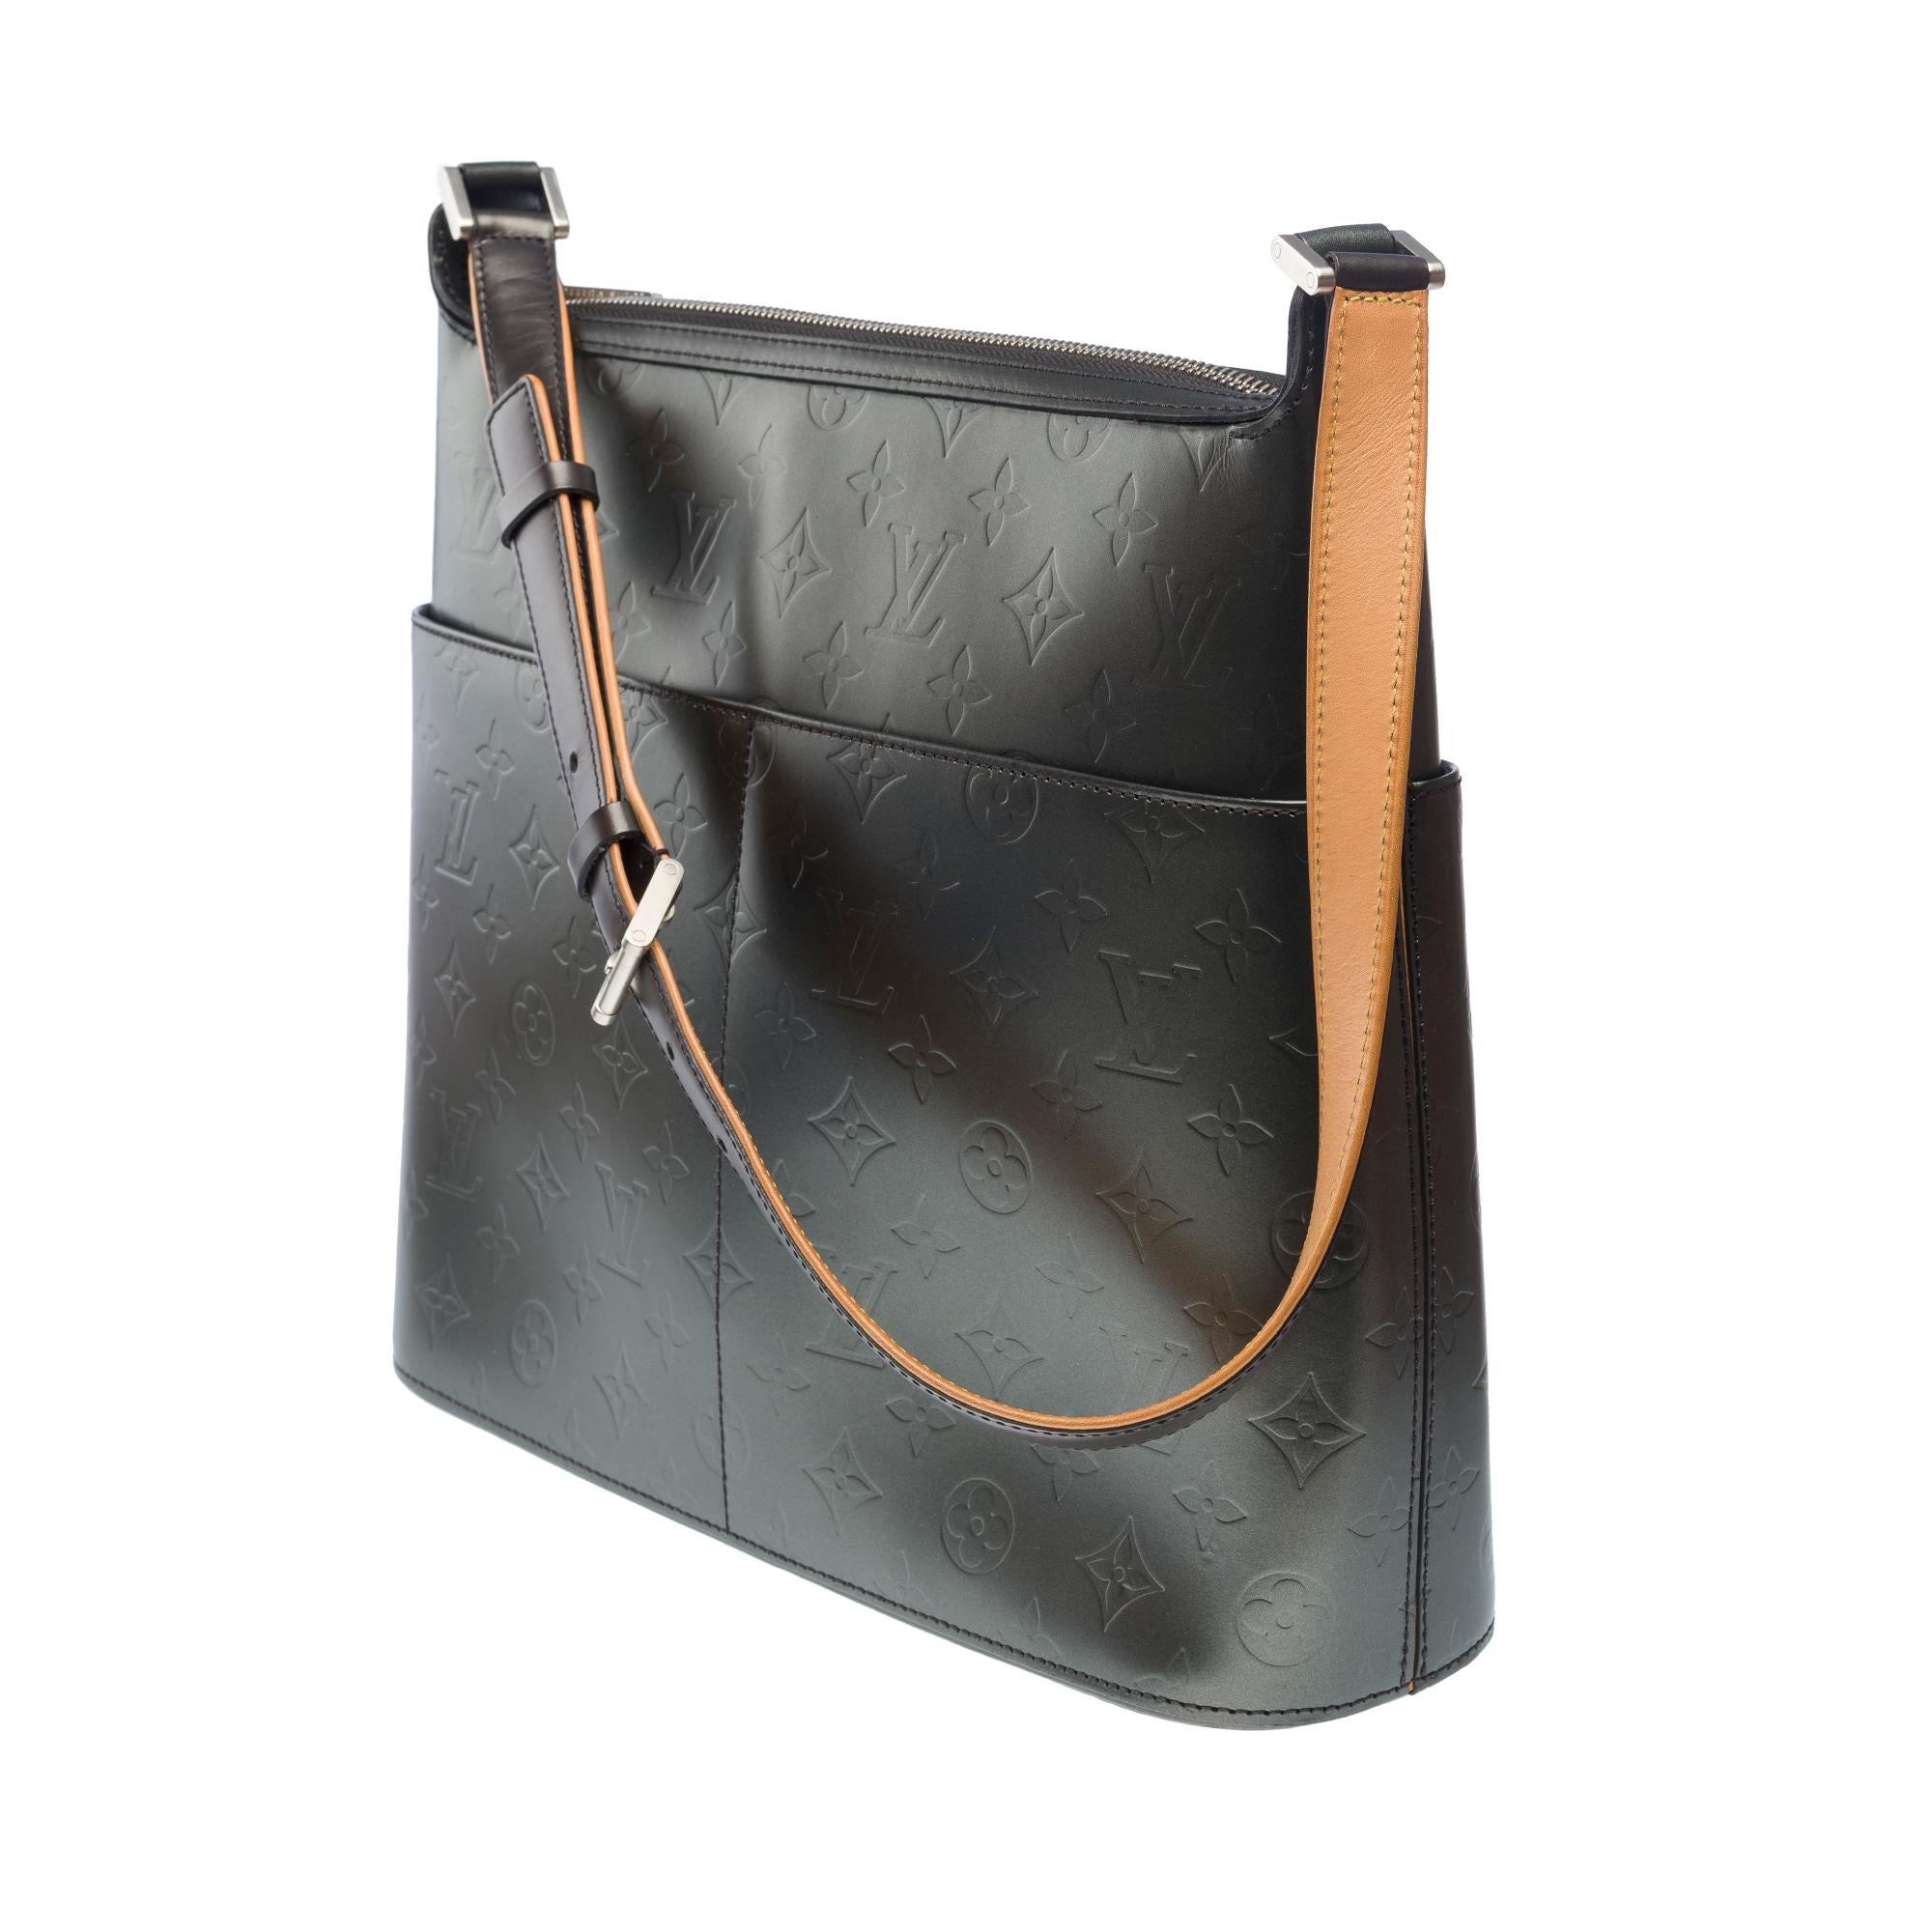 Women's Louis Vuitton Sutter shoulder bag in silver monogram leather, SHW For Sale